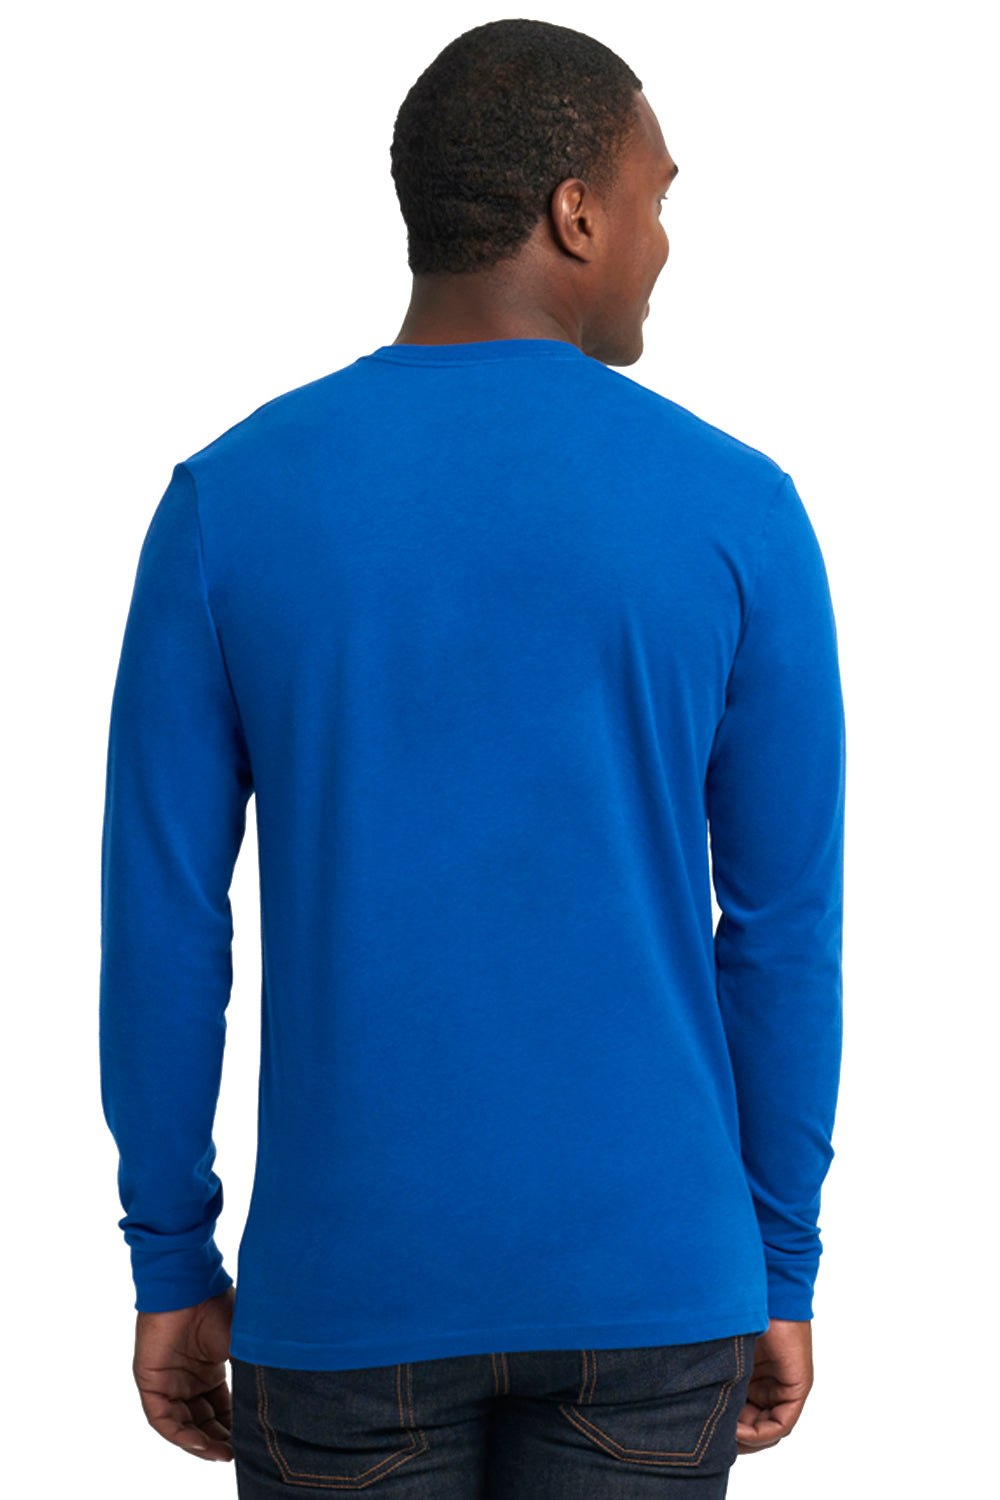 Next Level 6411 Sueded Jersey Long Sleeve Crewneck T-Shirt Royal Blue Back